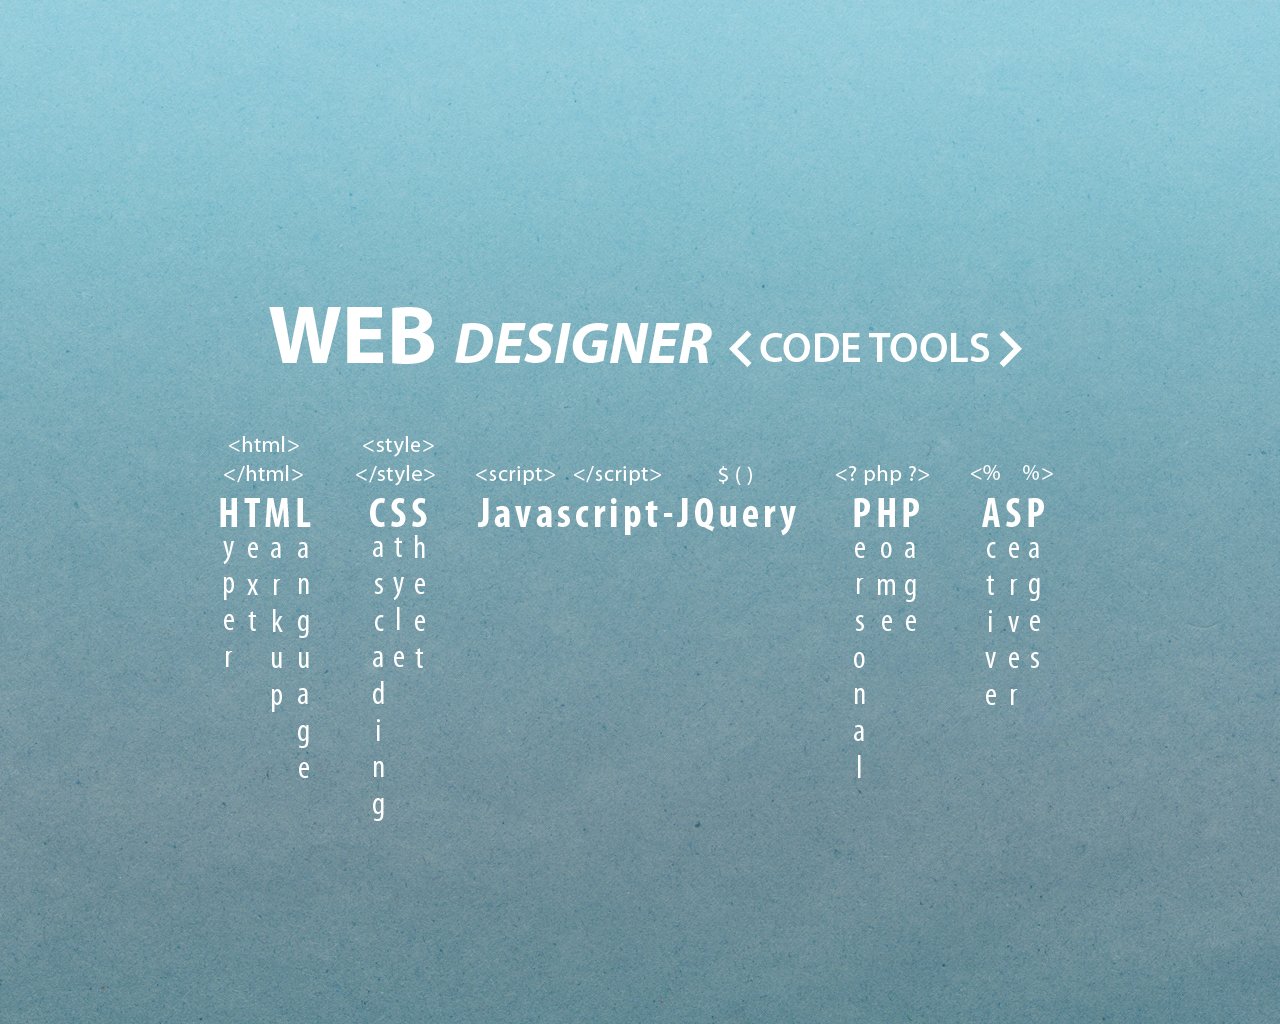 web designer code tools wallpaper by dabbex30 customization wallpaper